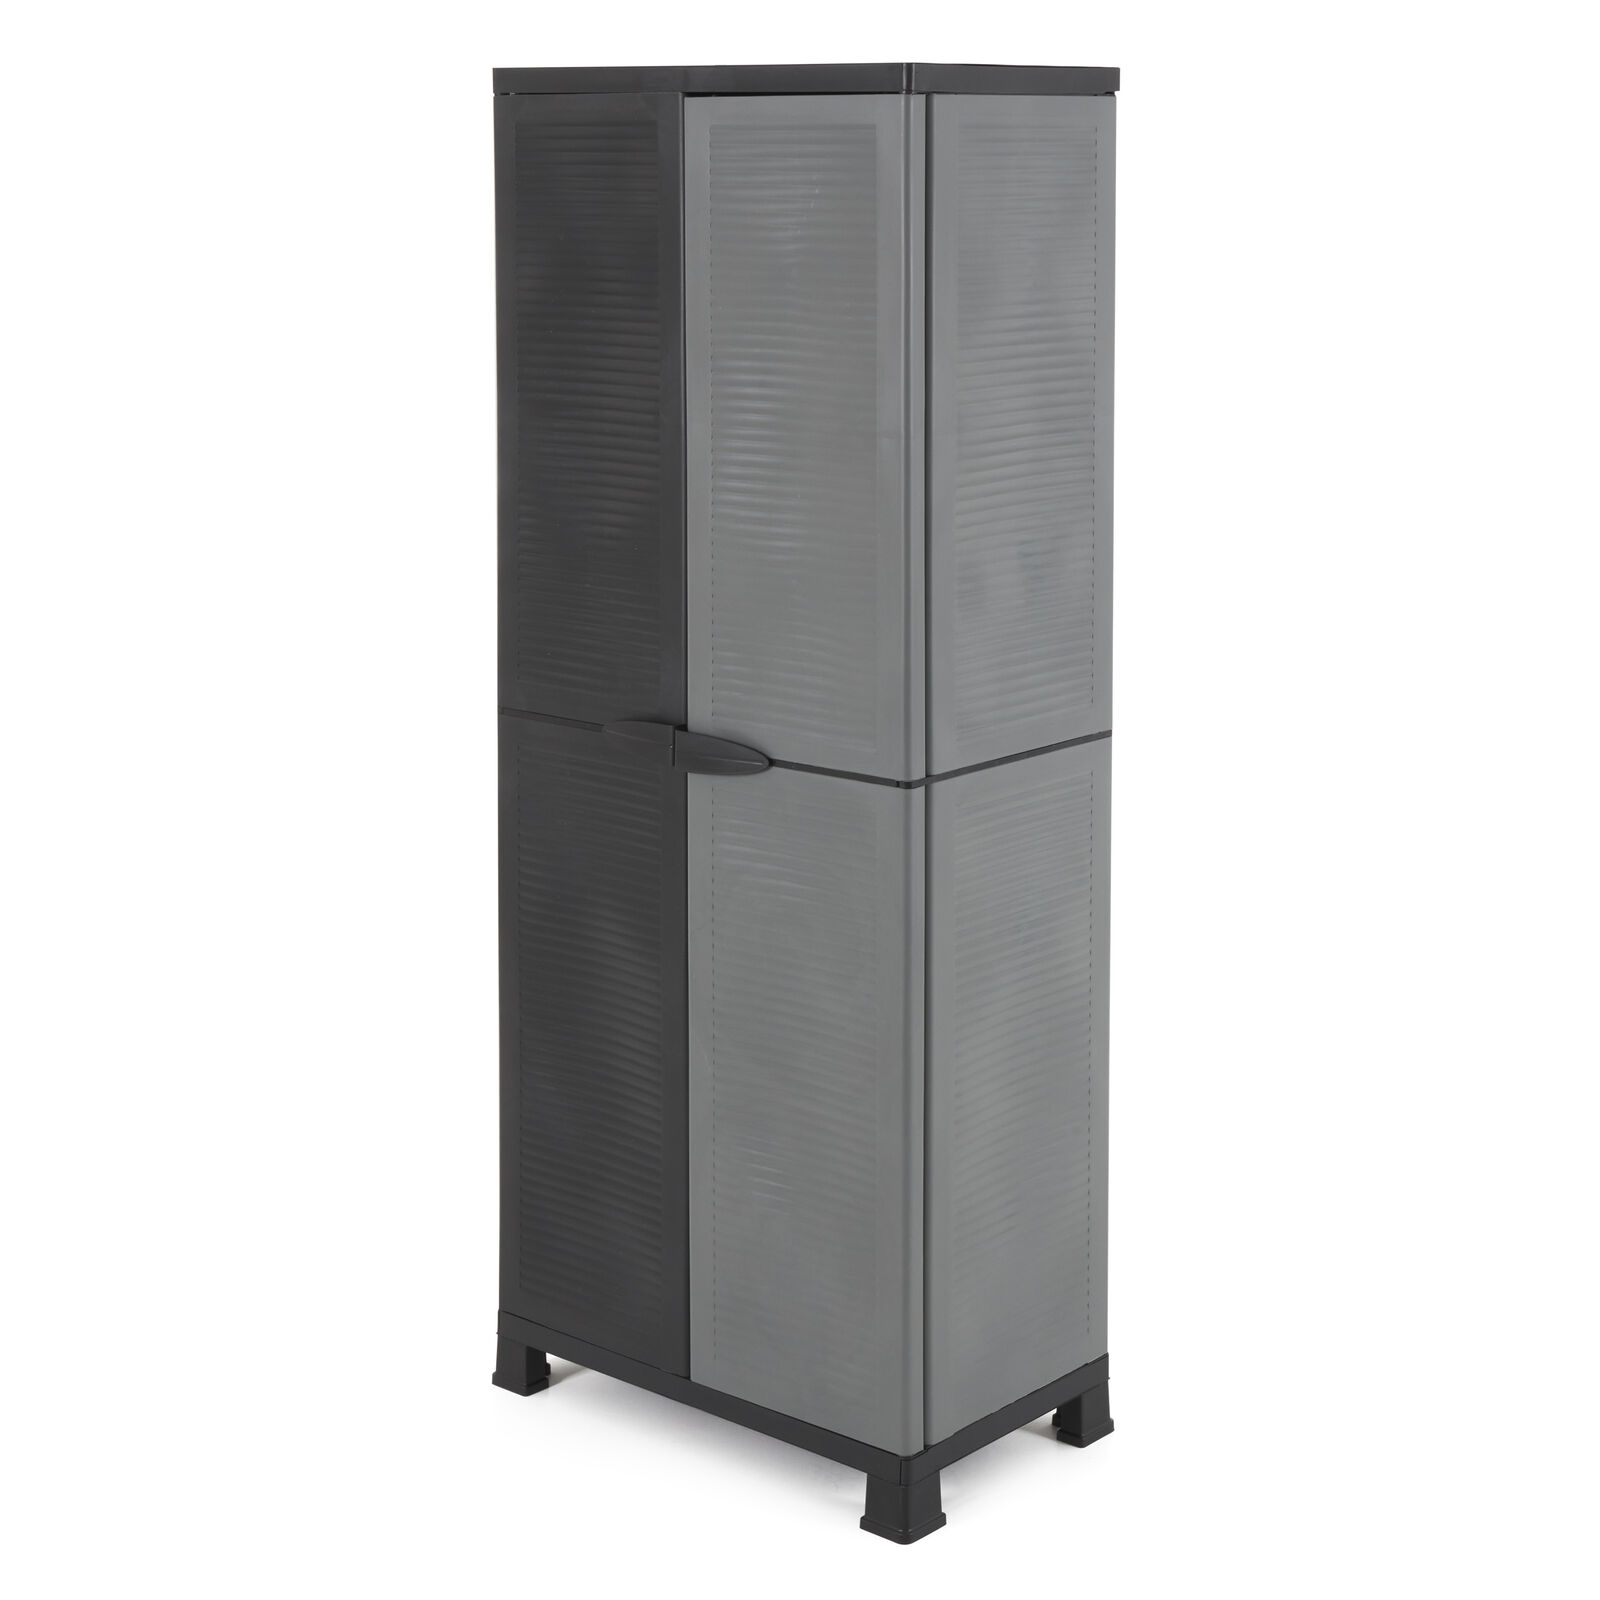 RAM Quality Products UTILITY 3 Shelf Lockable Storage Cabinet, Gray (Open Box)